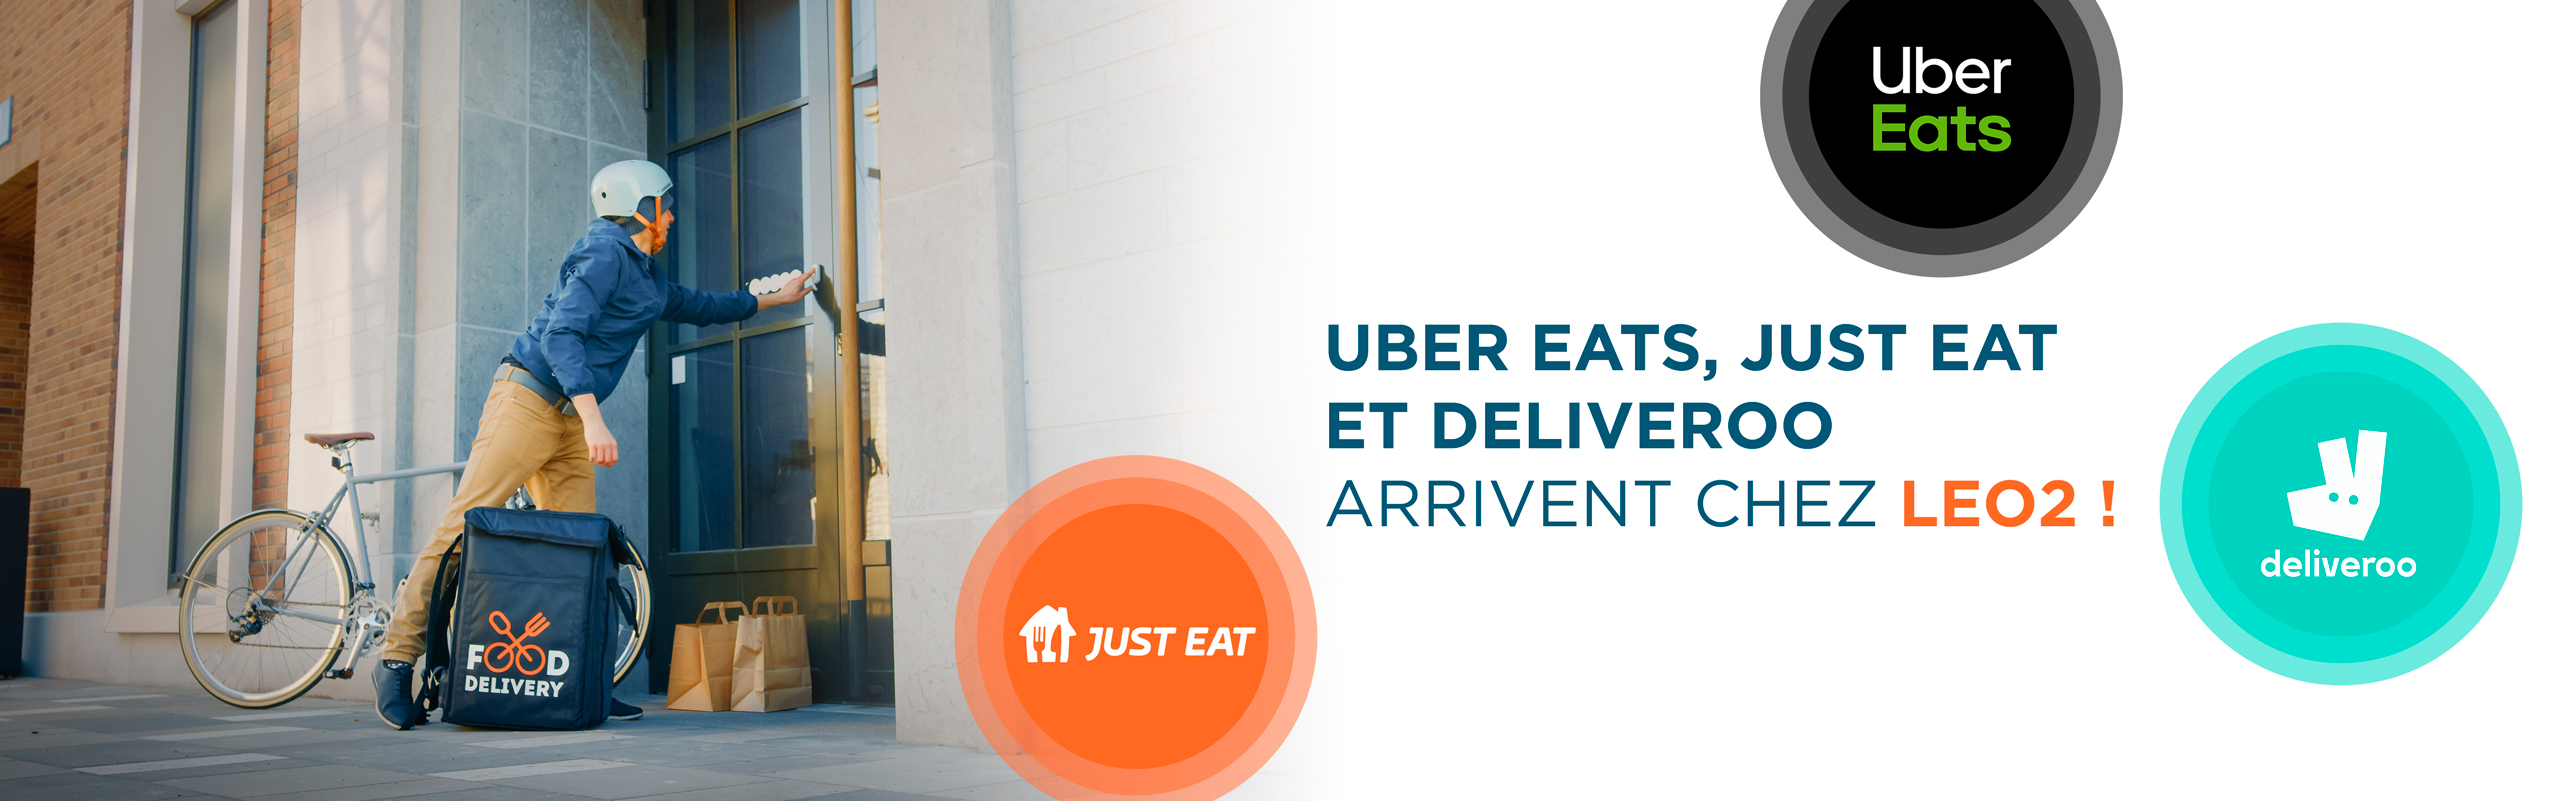 uber eats, just eat et deliveroo arrivent chez LEO2